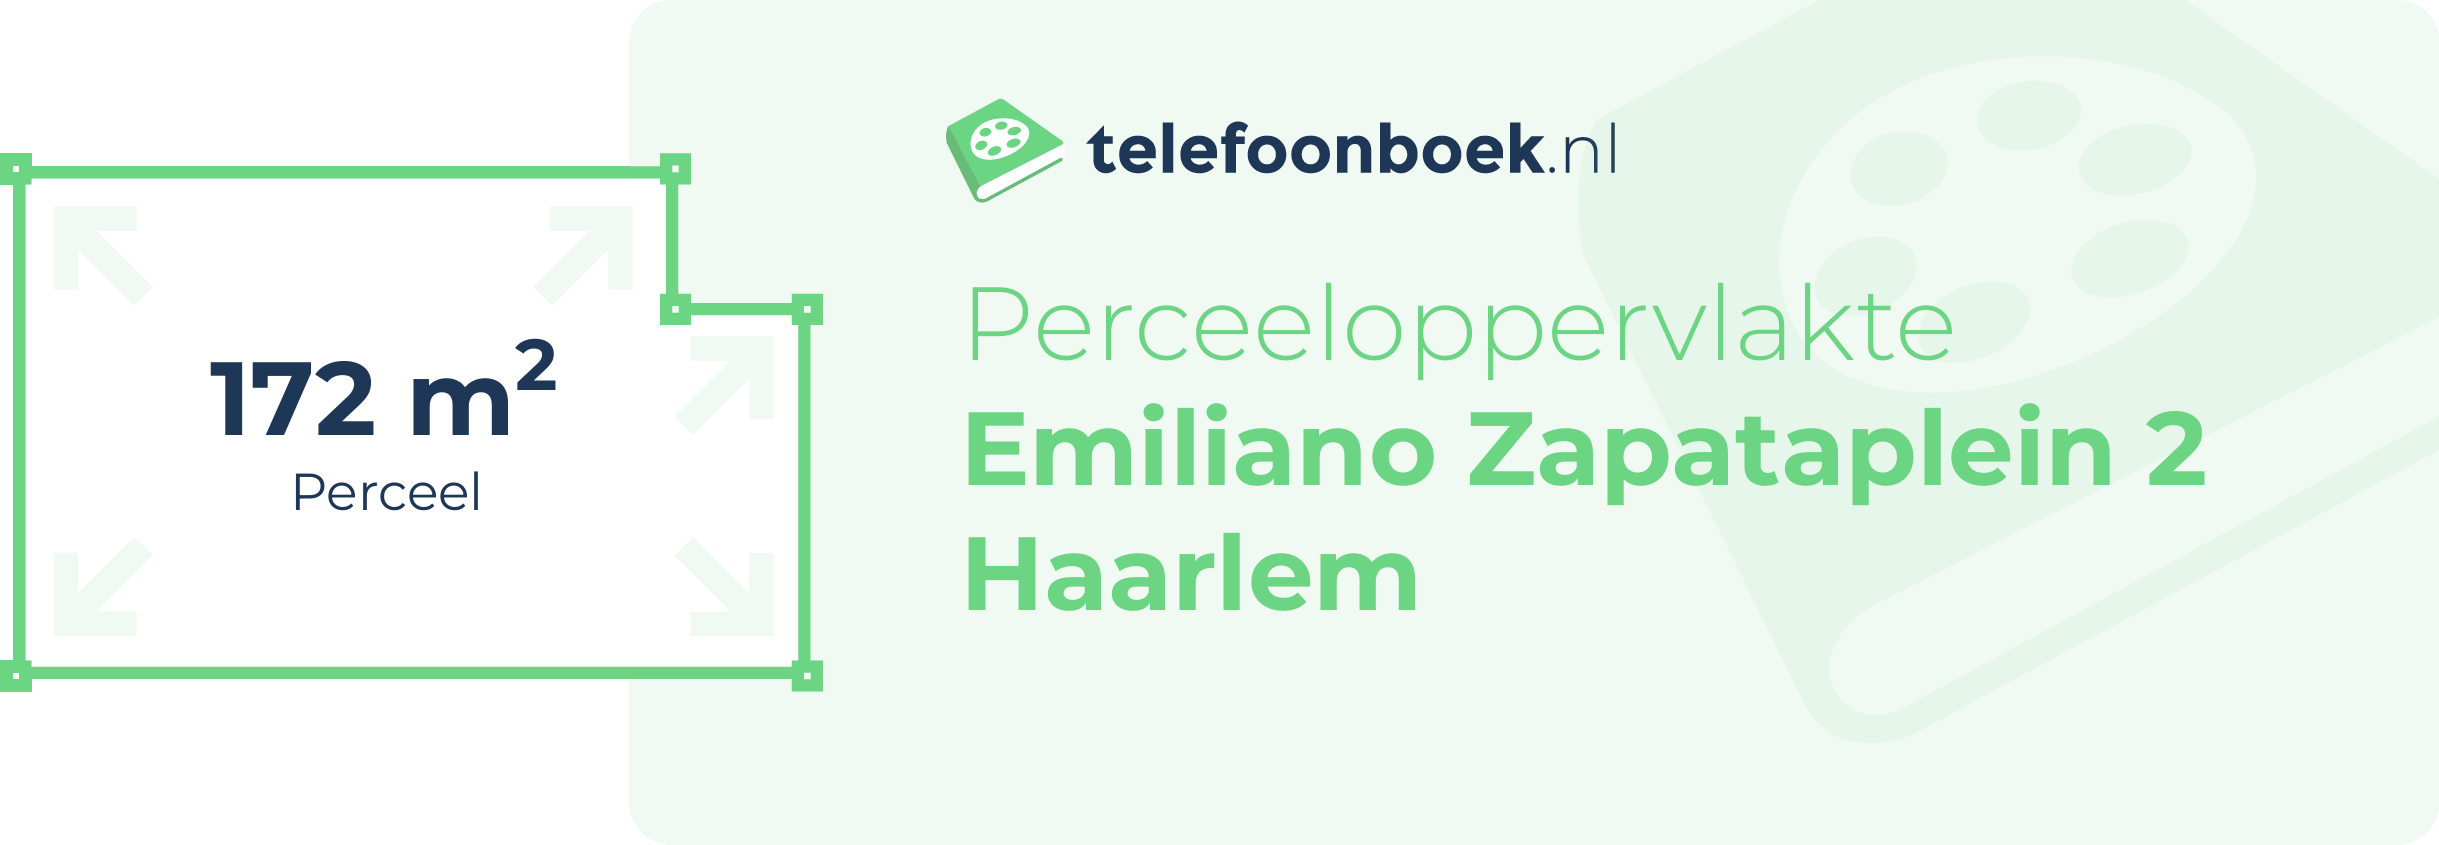 Perceeloppervlakte Emiliano Zapataplein 2 Haarlem